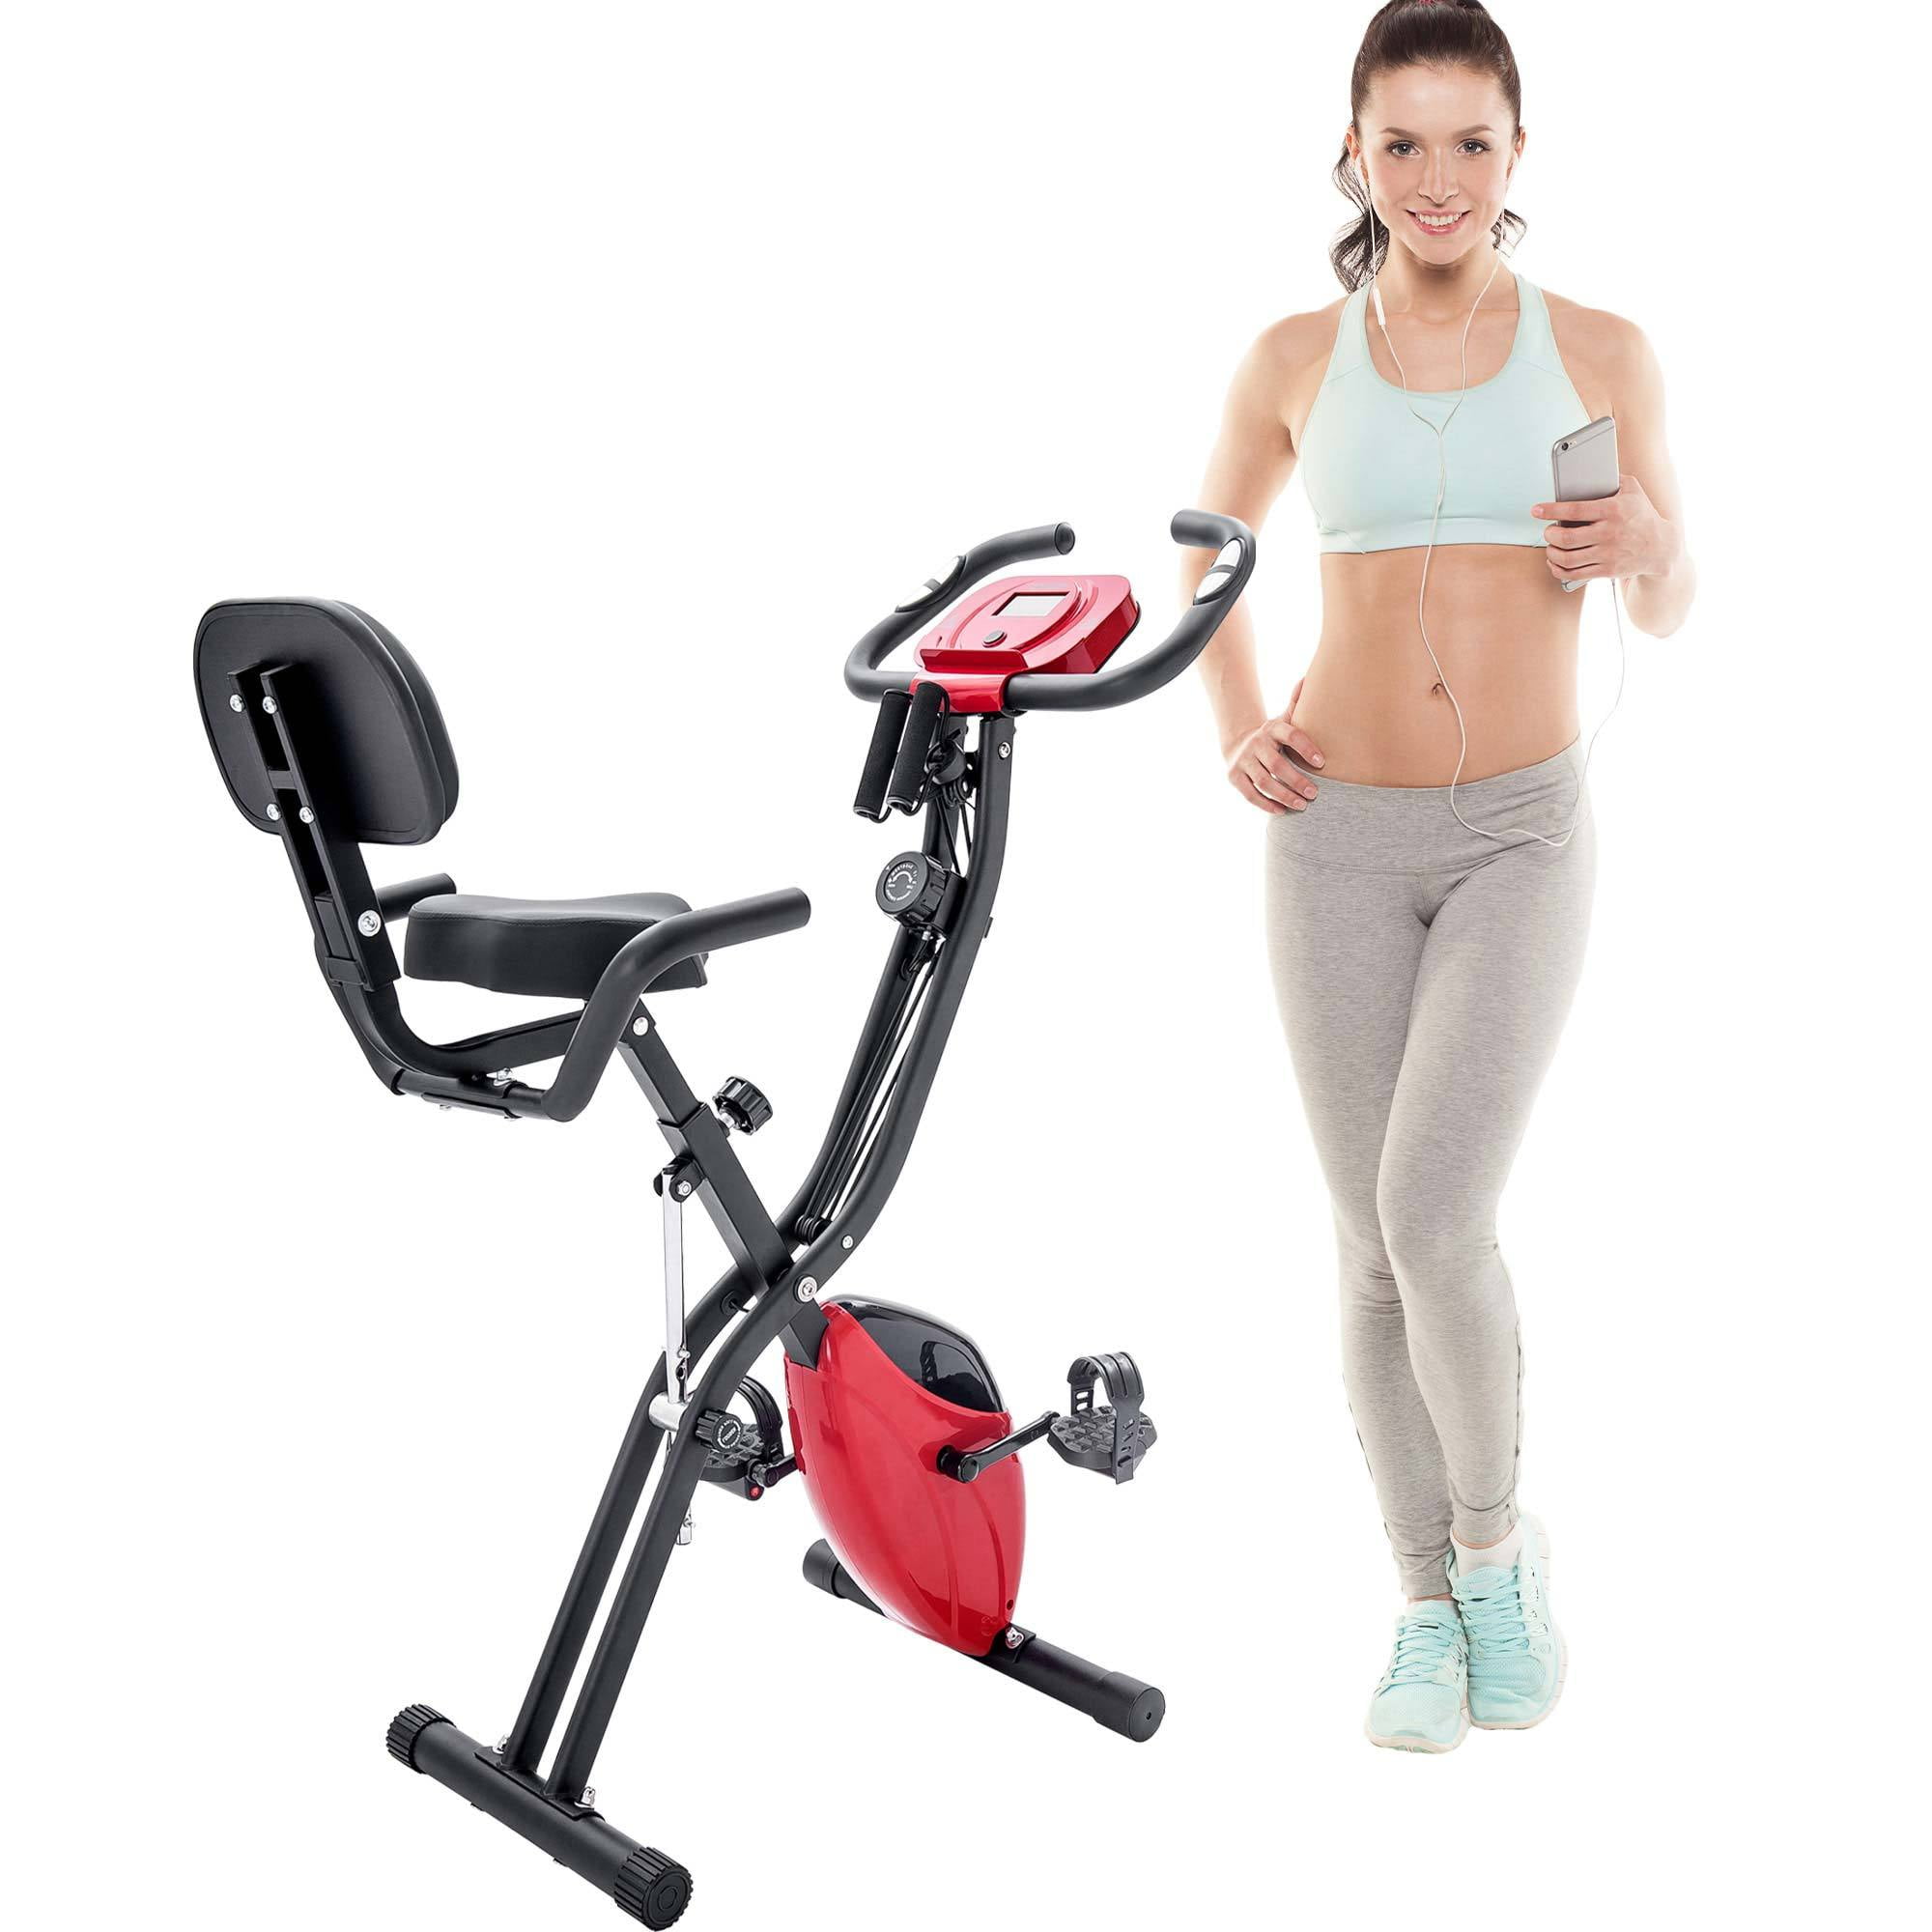 Folding Exercise Bike Adjustable Resistance Cardio Workout Indoor Fitness Bike 